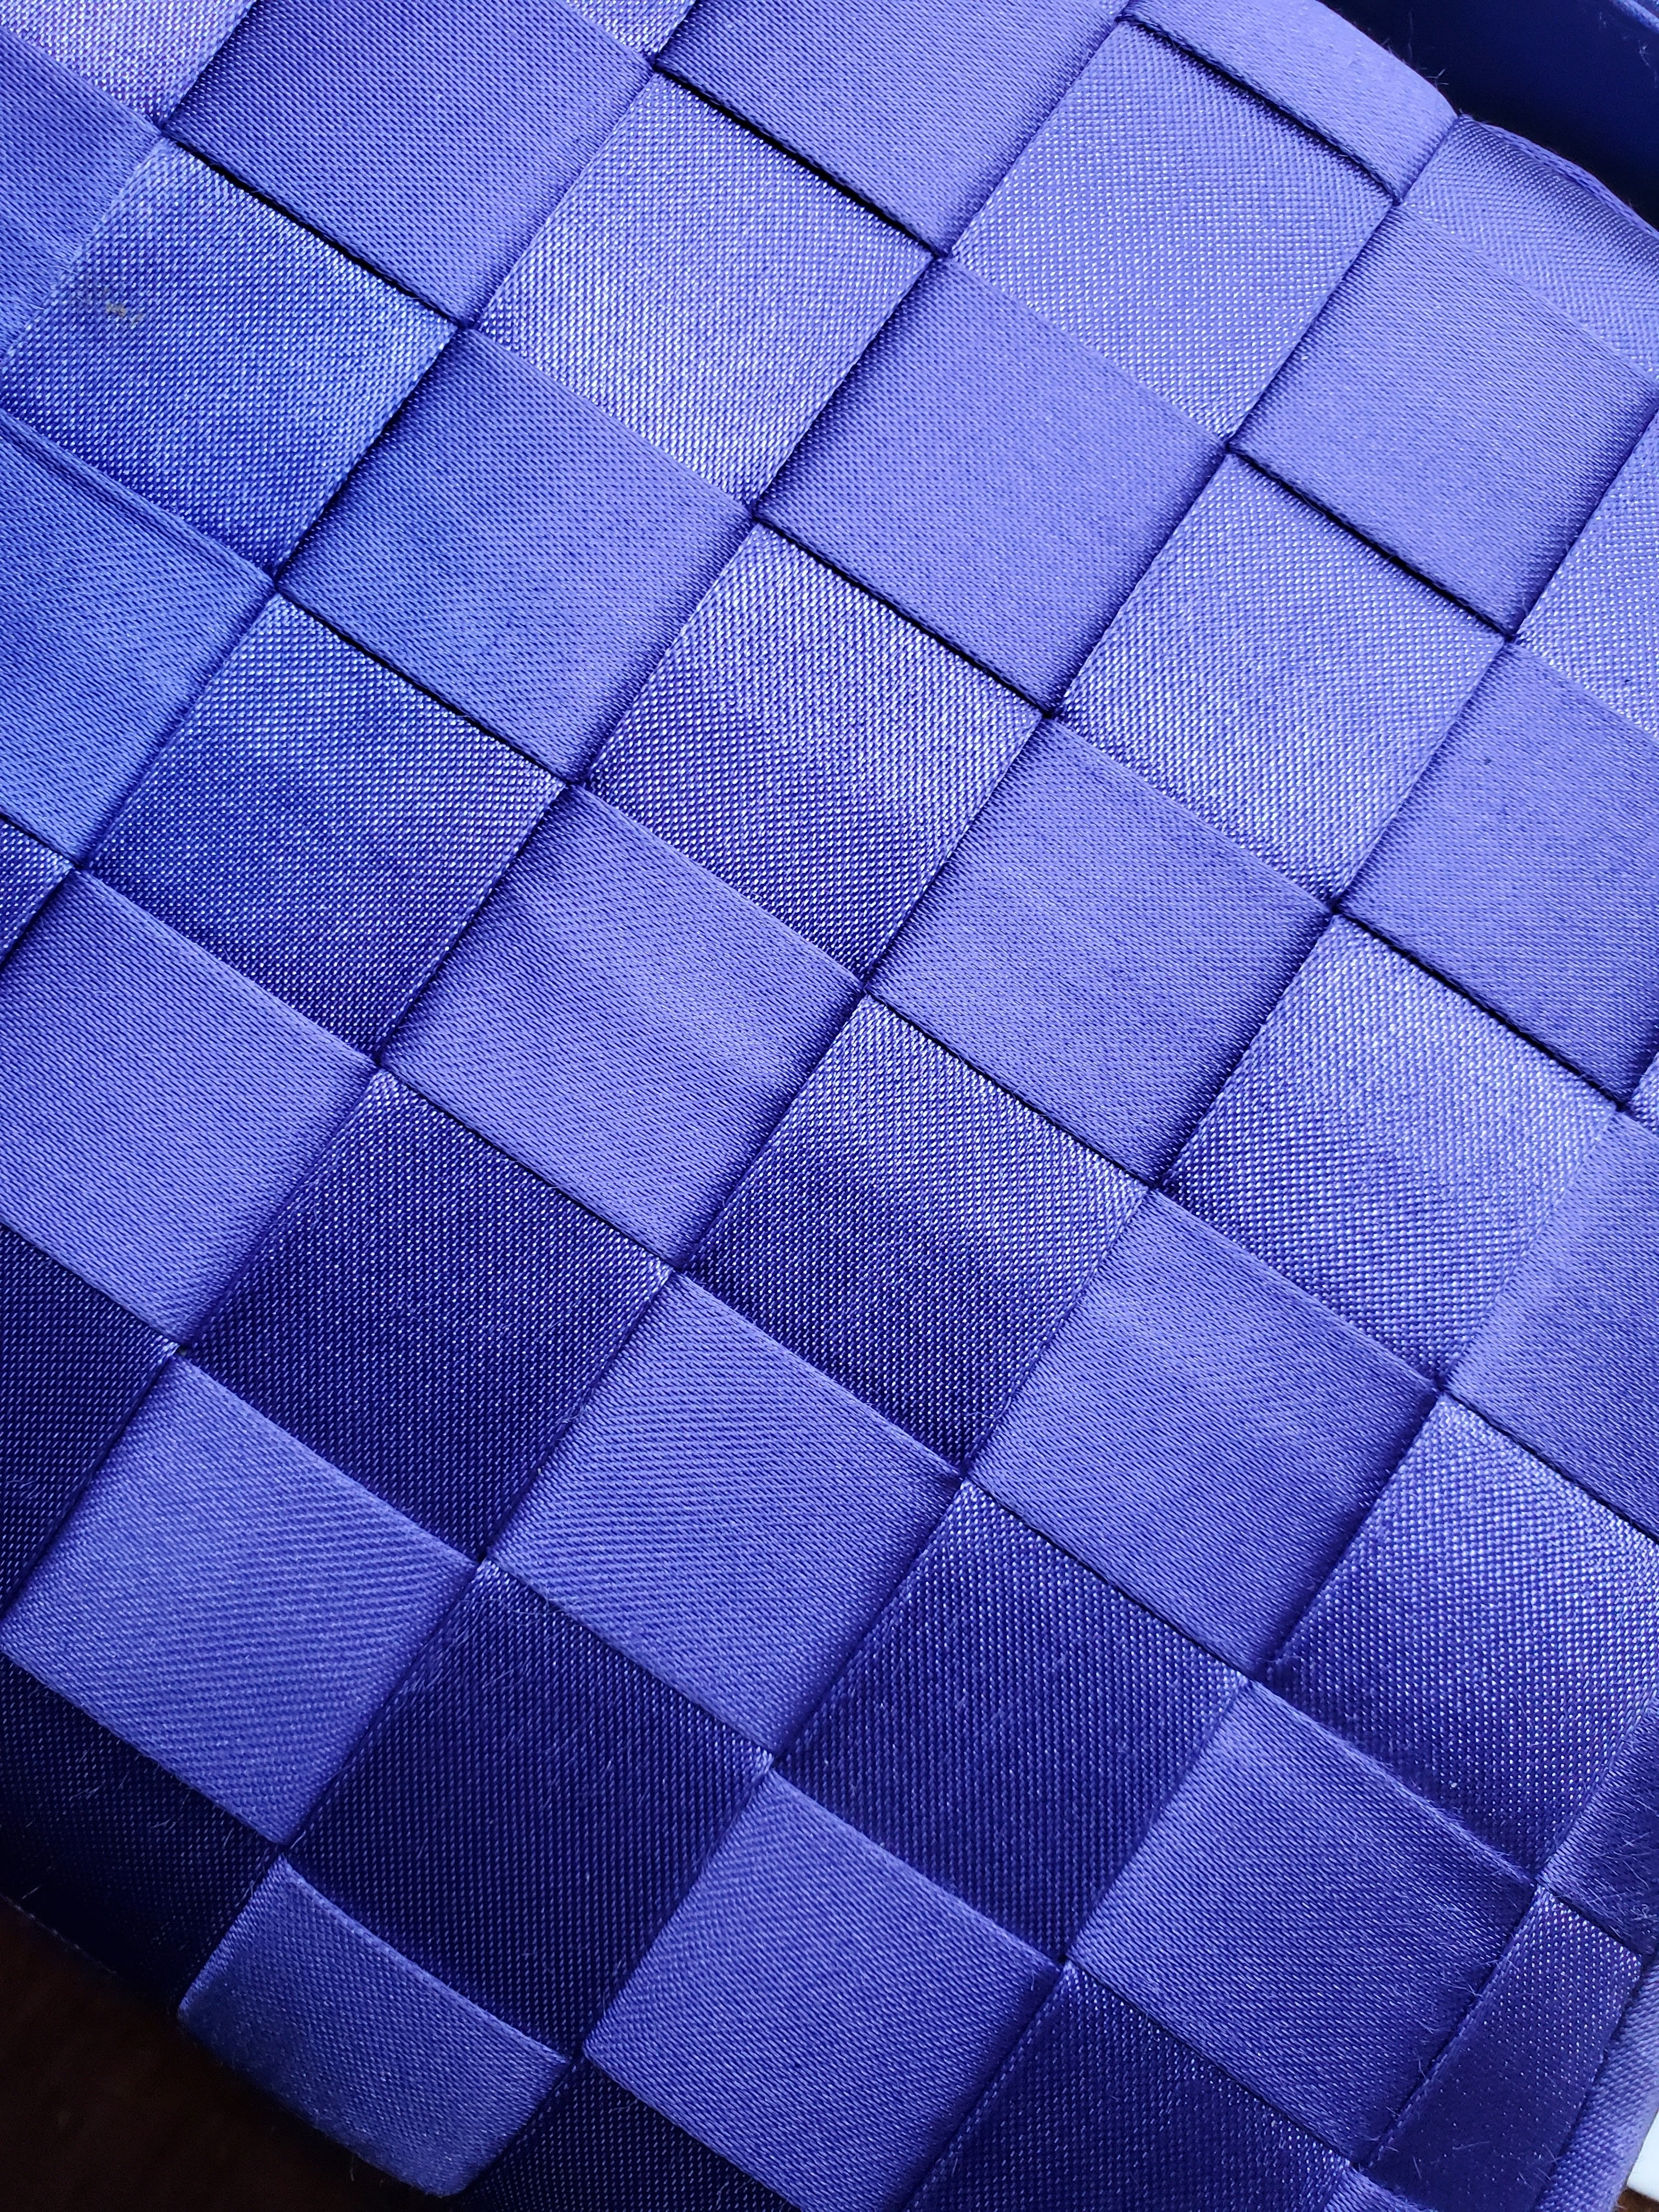 view of purple handbag woven details